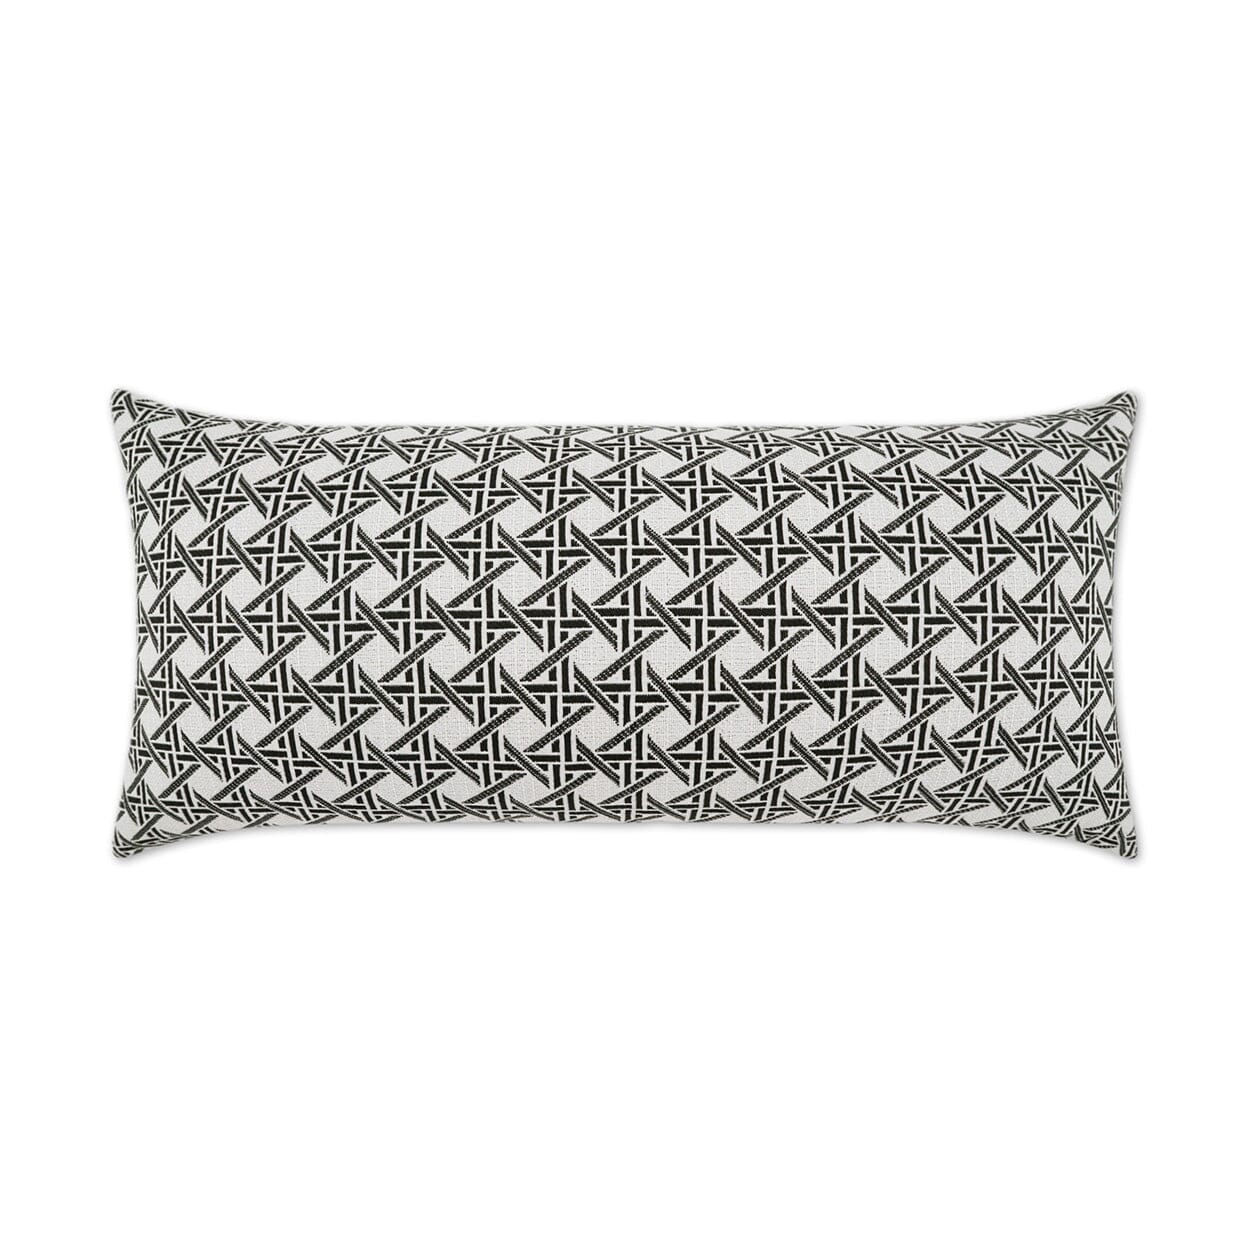 D.V. Kap 12" x 24" Outdoor Lumbar Pillow | Pella Ebony Lumbar Pillows D.V Kap Outdoor